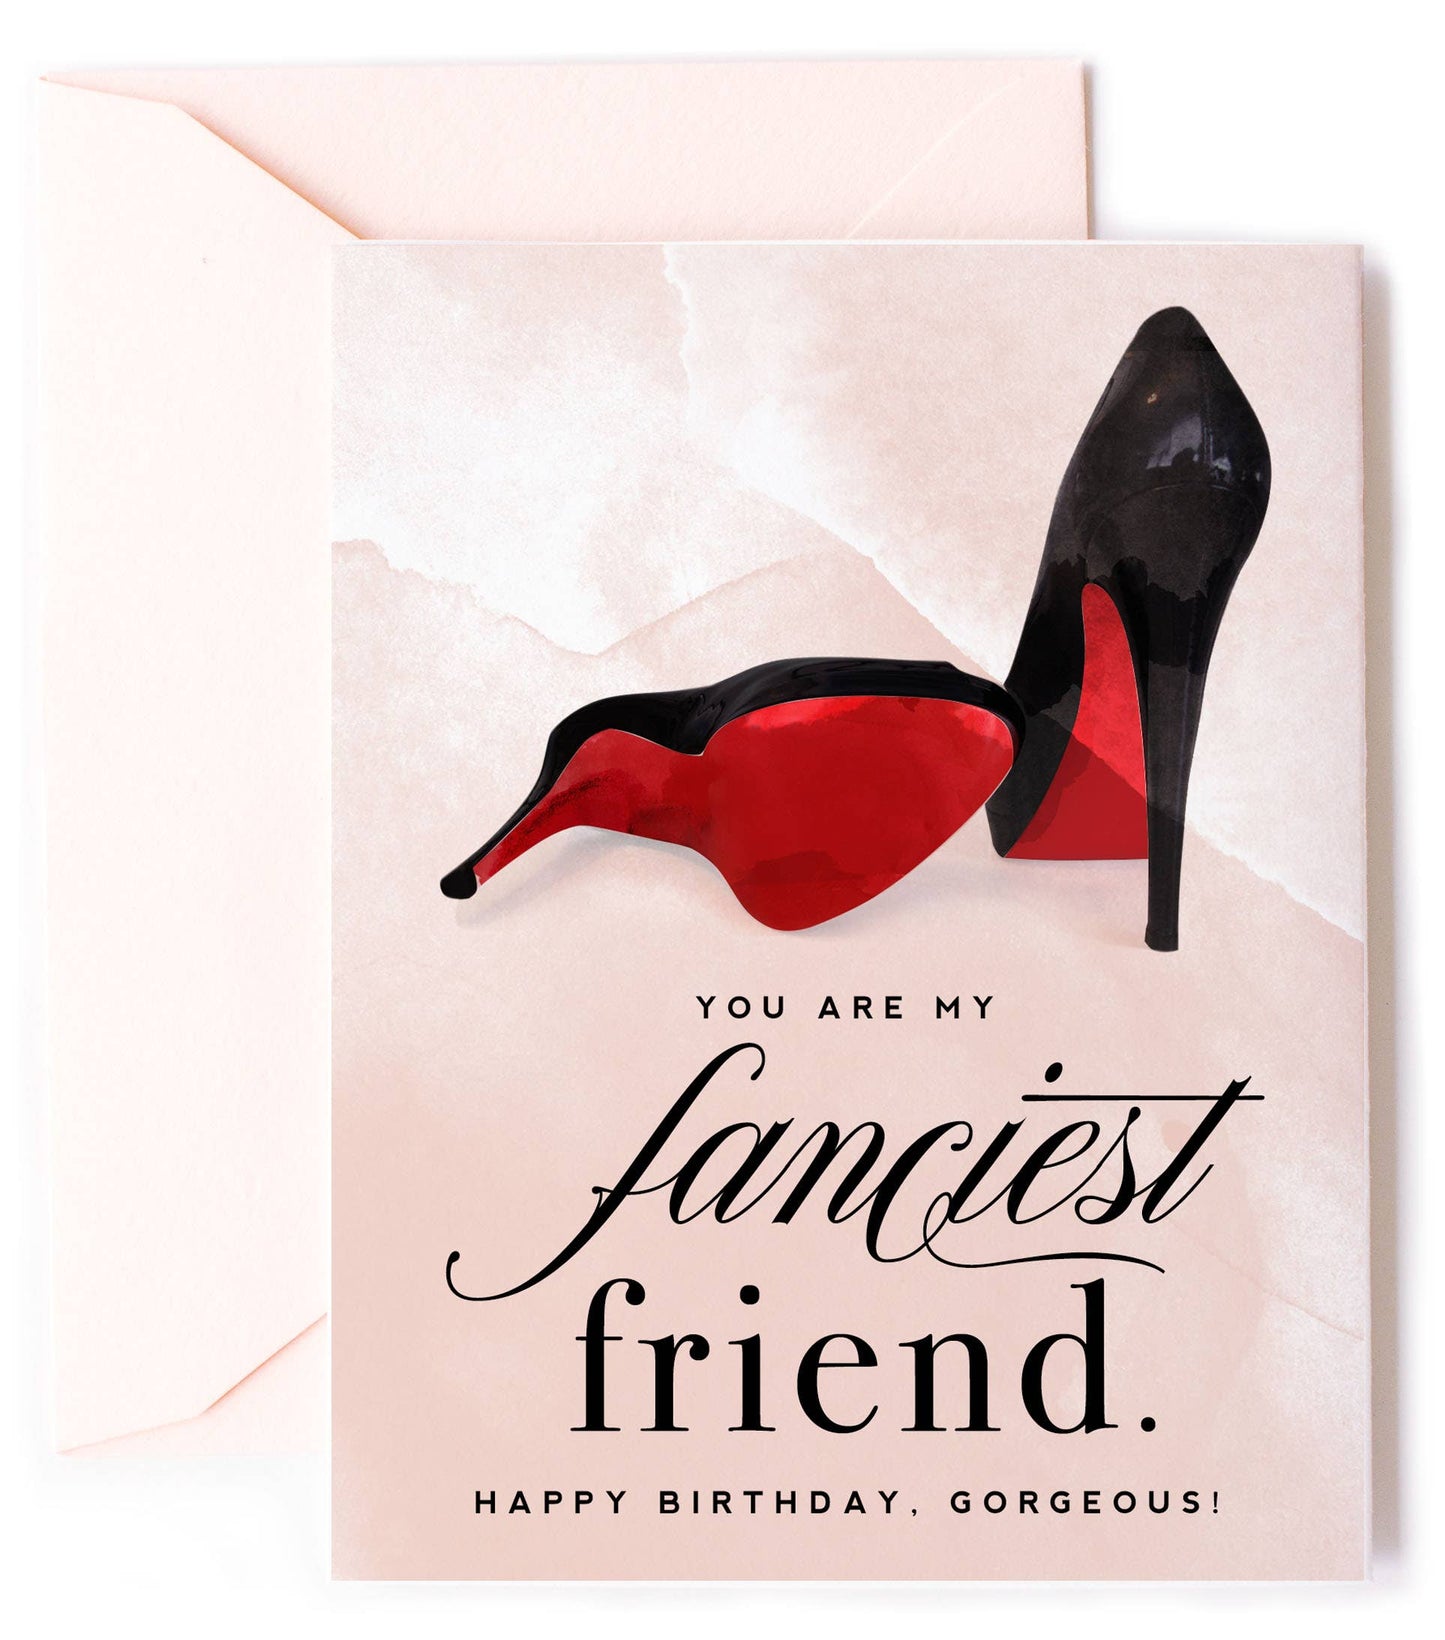 Fanciest Friend Birthday Card with Red Bottom High Heels